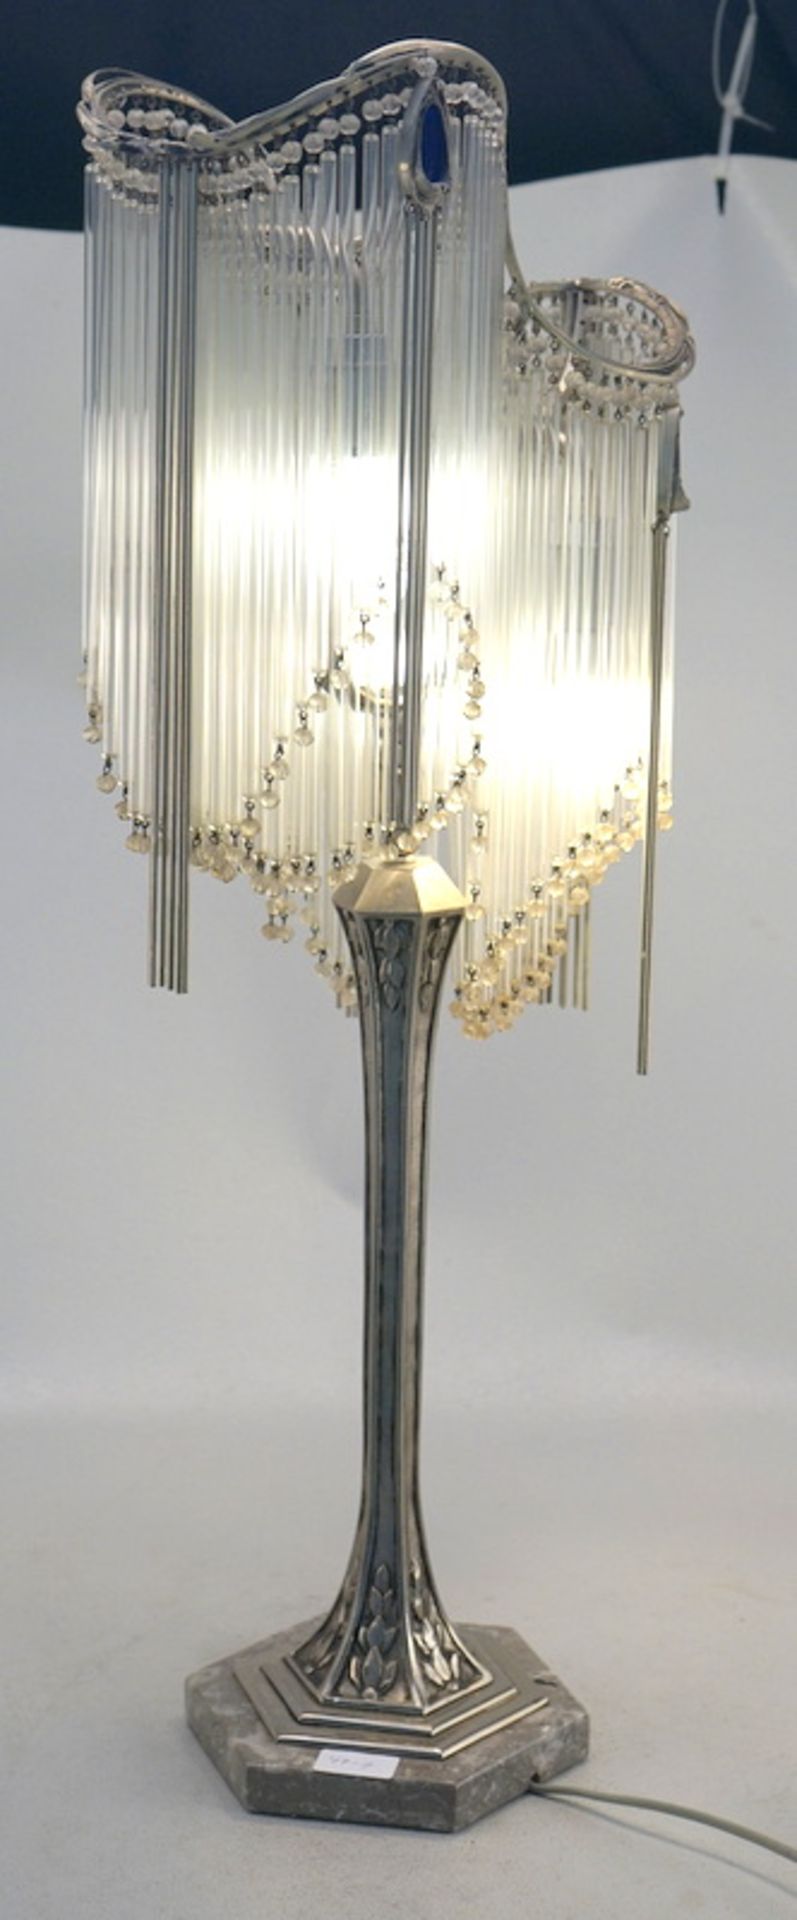 Tischlampe, Entwurf Hector Guimard, 20. Jhd. - Image 2 of 6